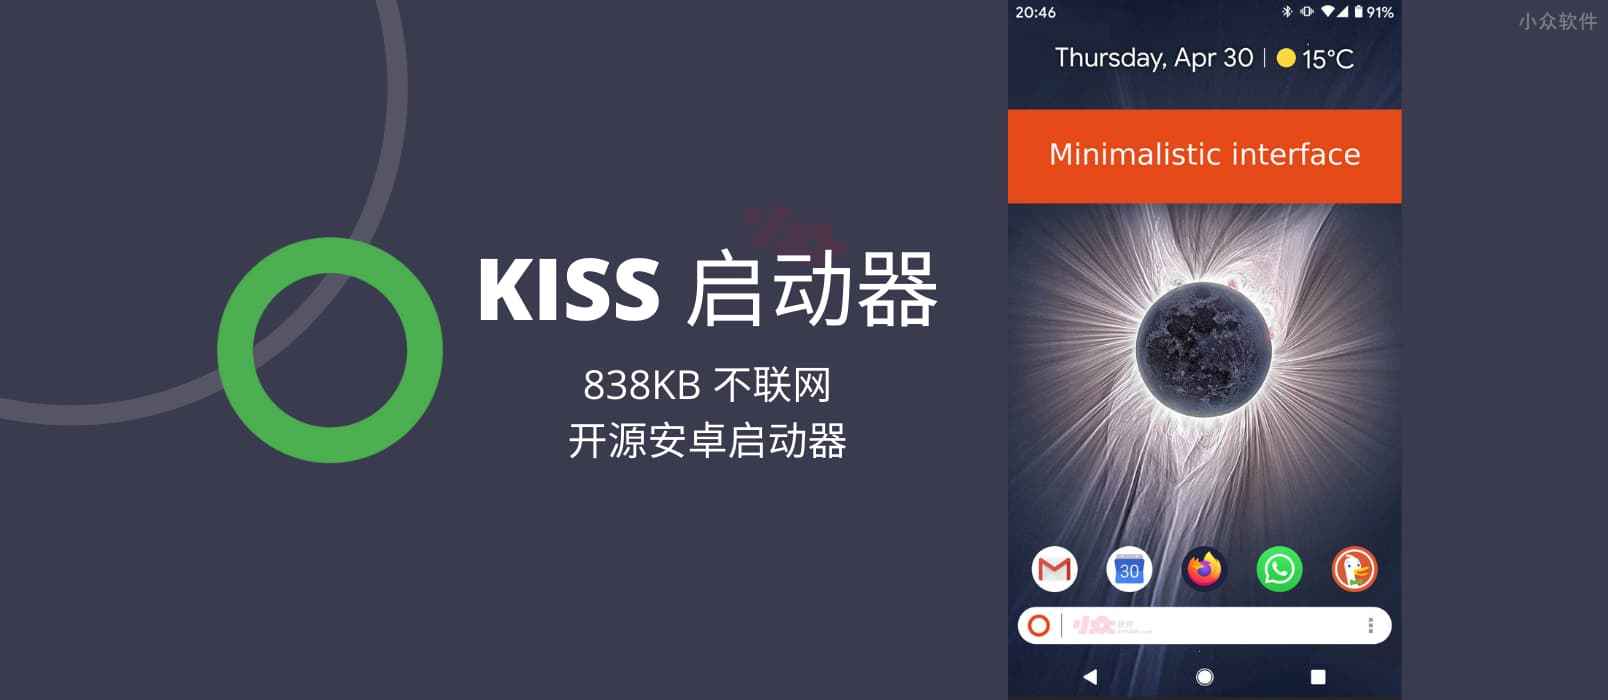 KISS 启动器 – 838KB 不联网，启动器也可以这样简单[Android]